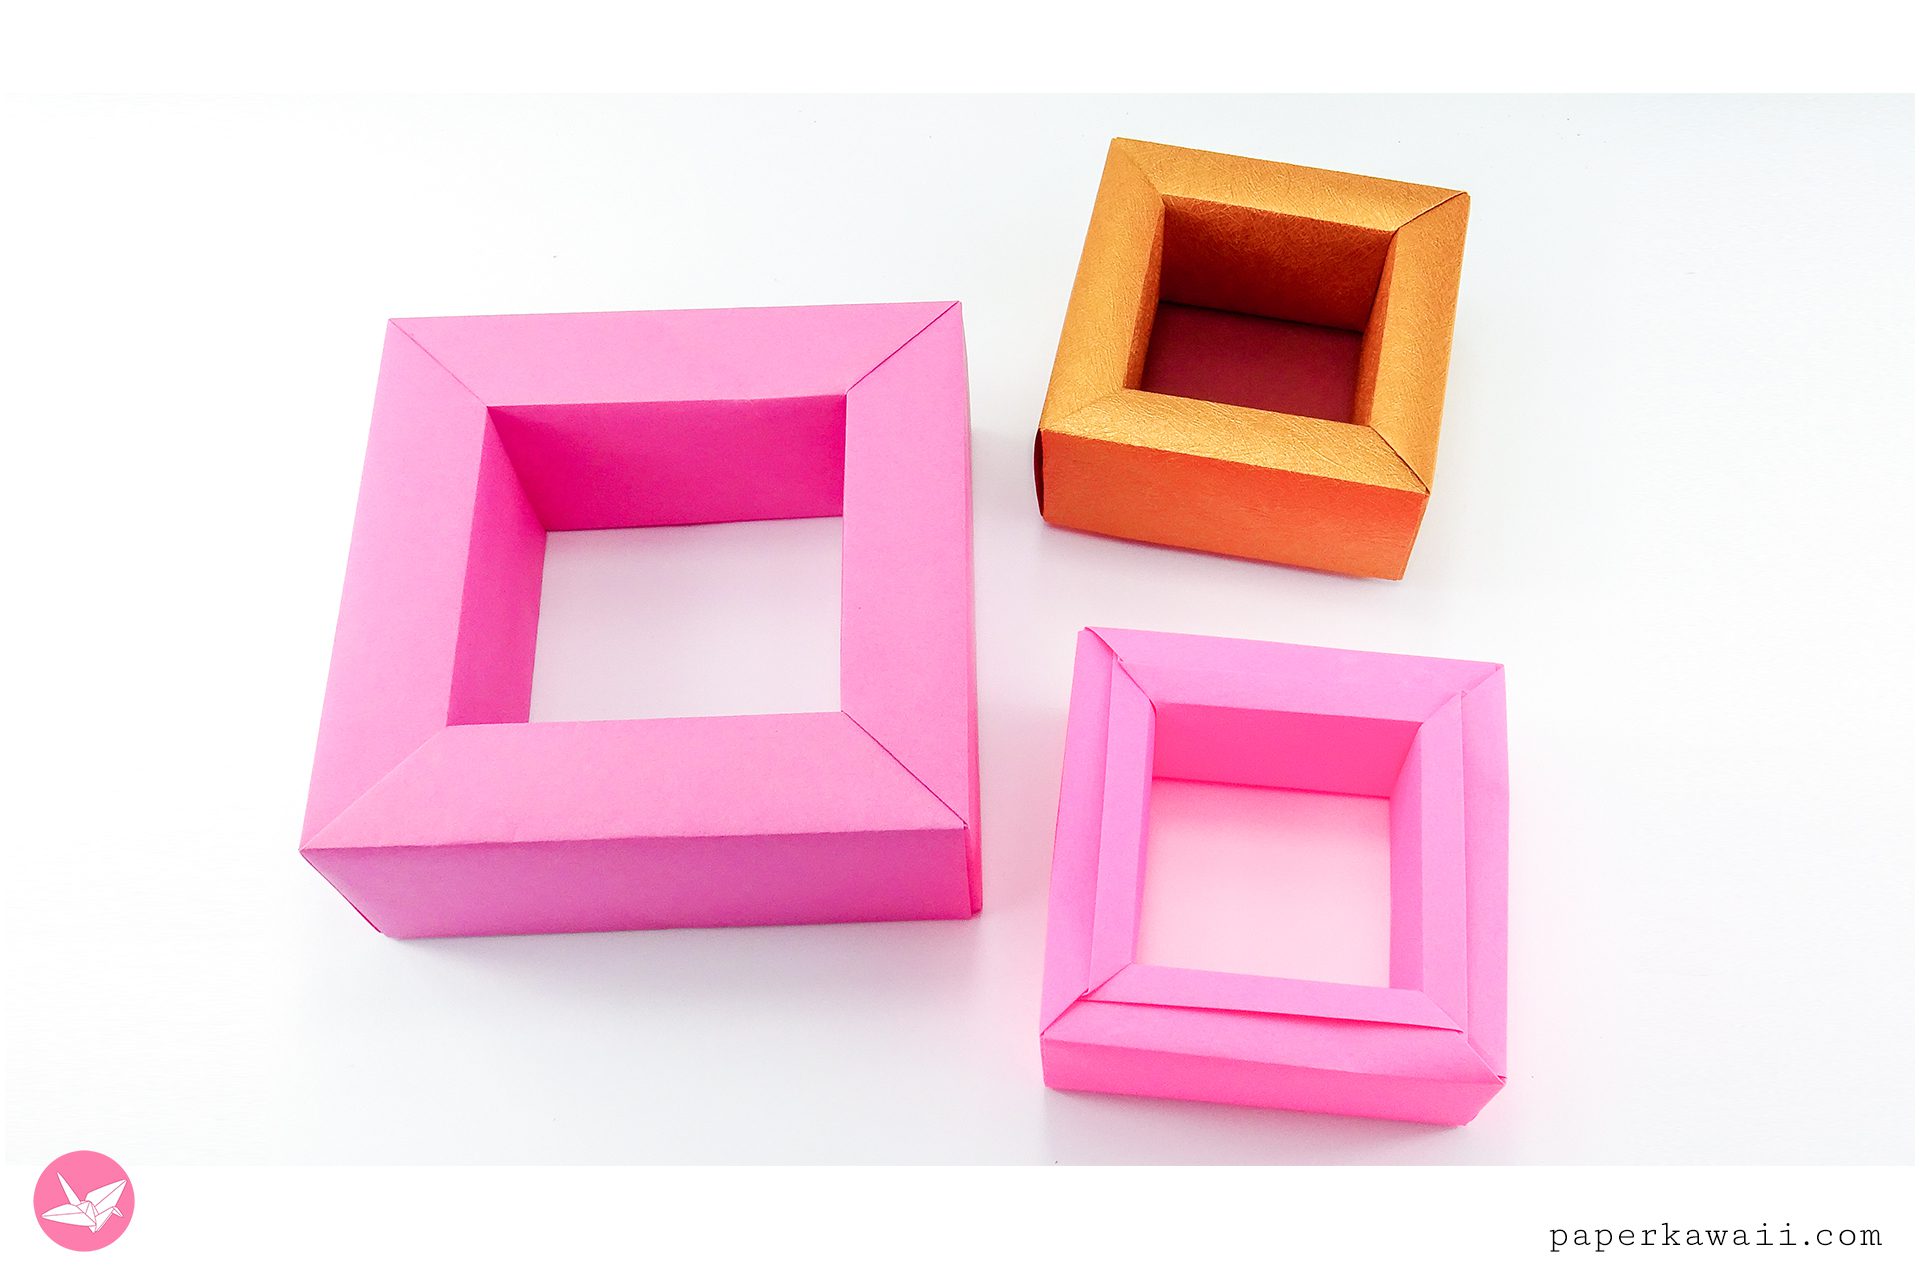 Modular Origami Display Frame Tutorial